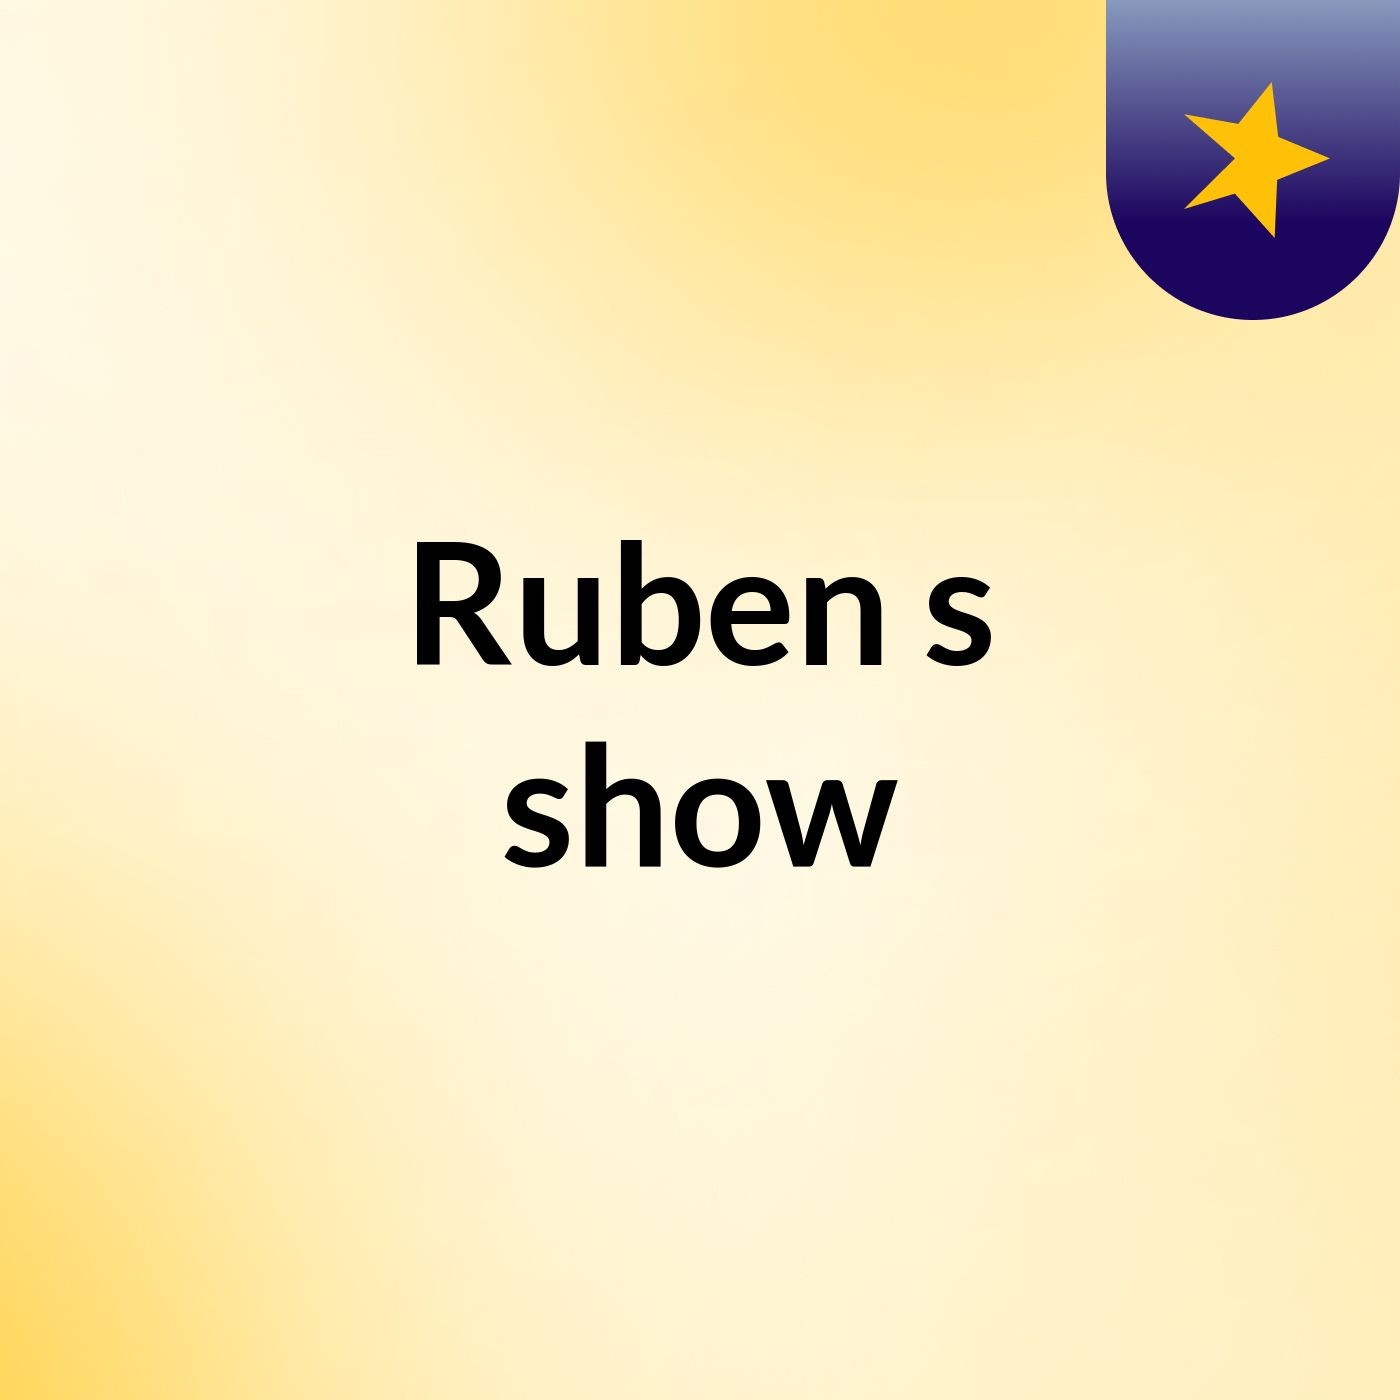 Ruben's show